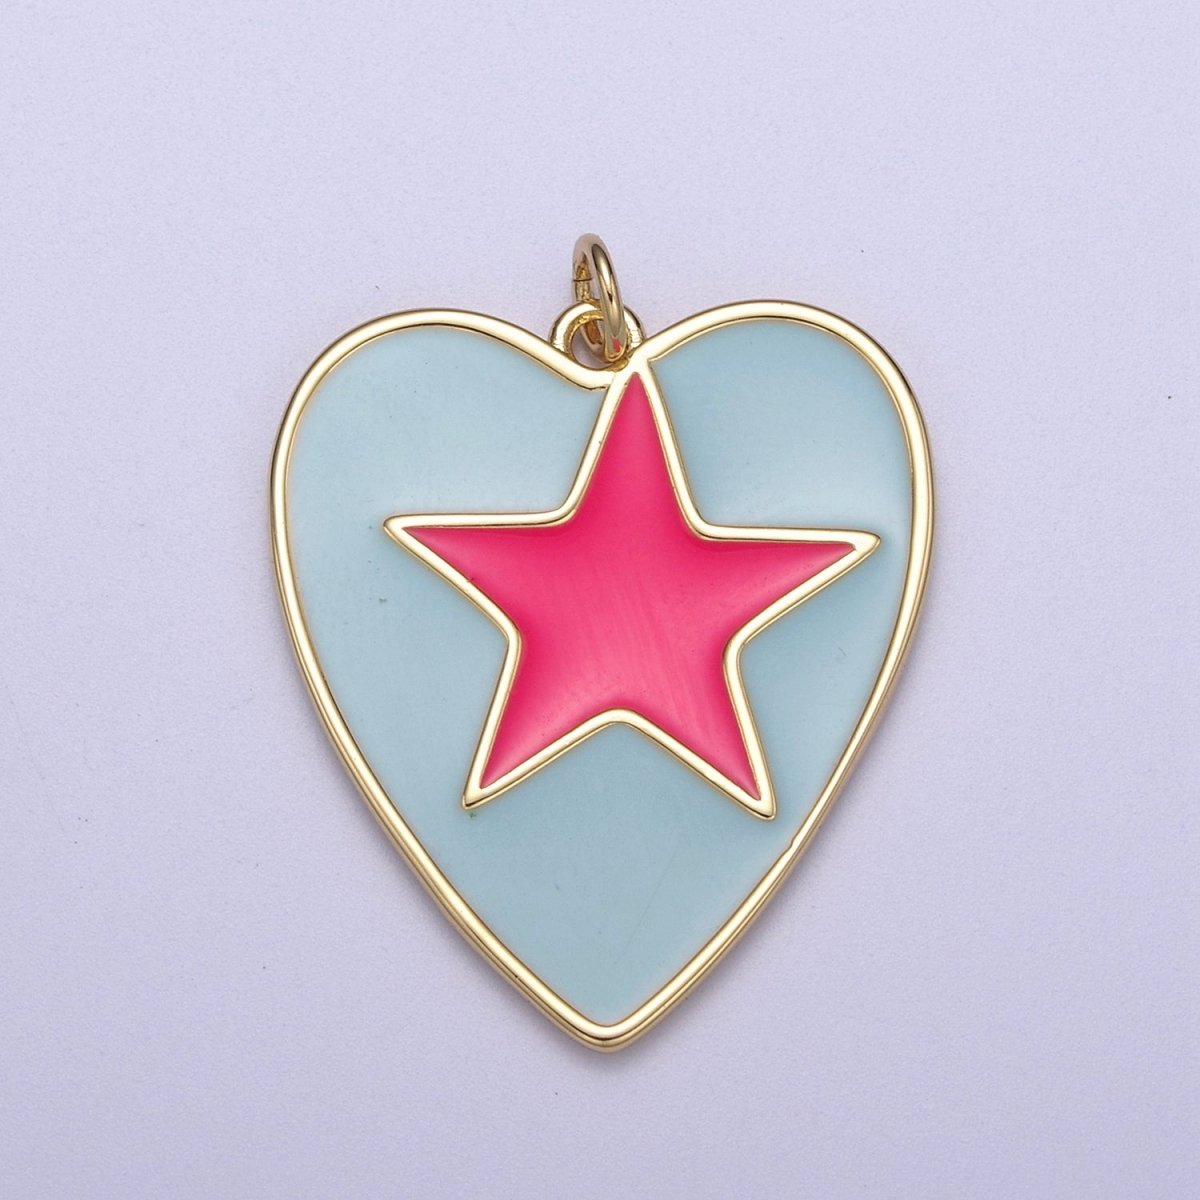 Enamel Colorful Five Point Star On Heart Shape Pendant, 14K Gold Filled Blue Enamel Charm N-300 - DLUXCA